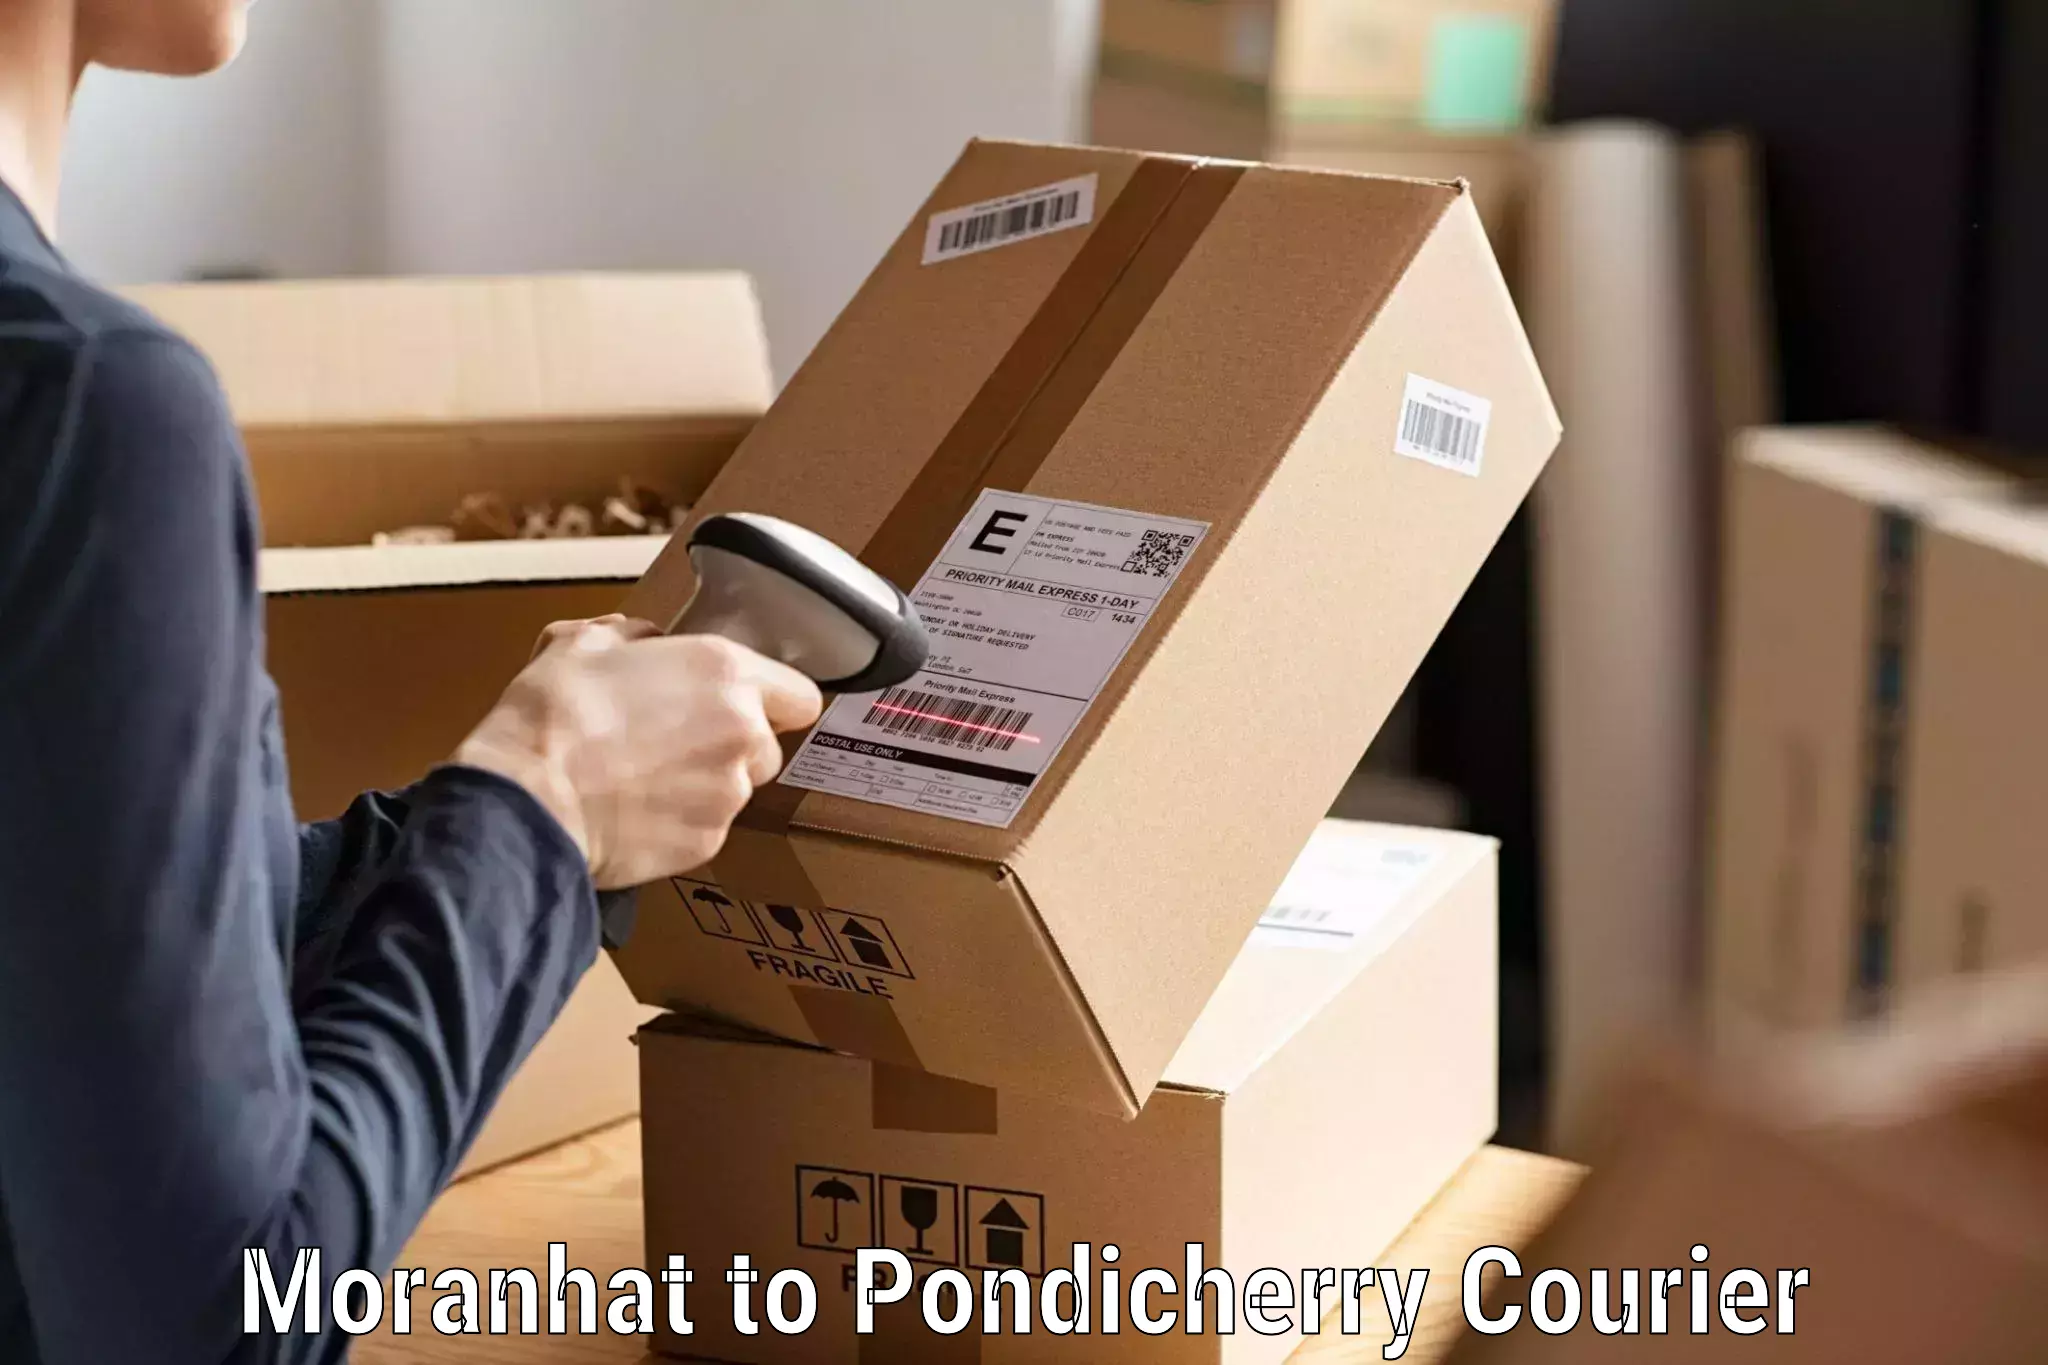 Sustainable courier practices Moranhat to Pondicherry